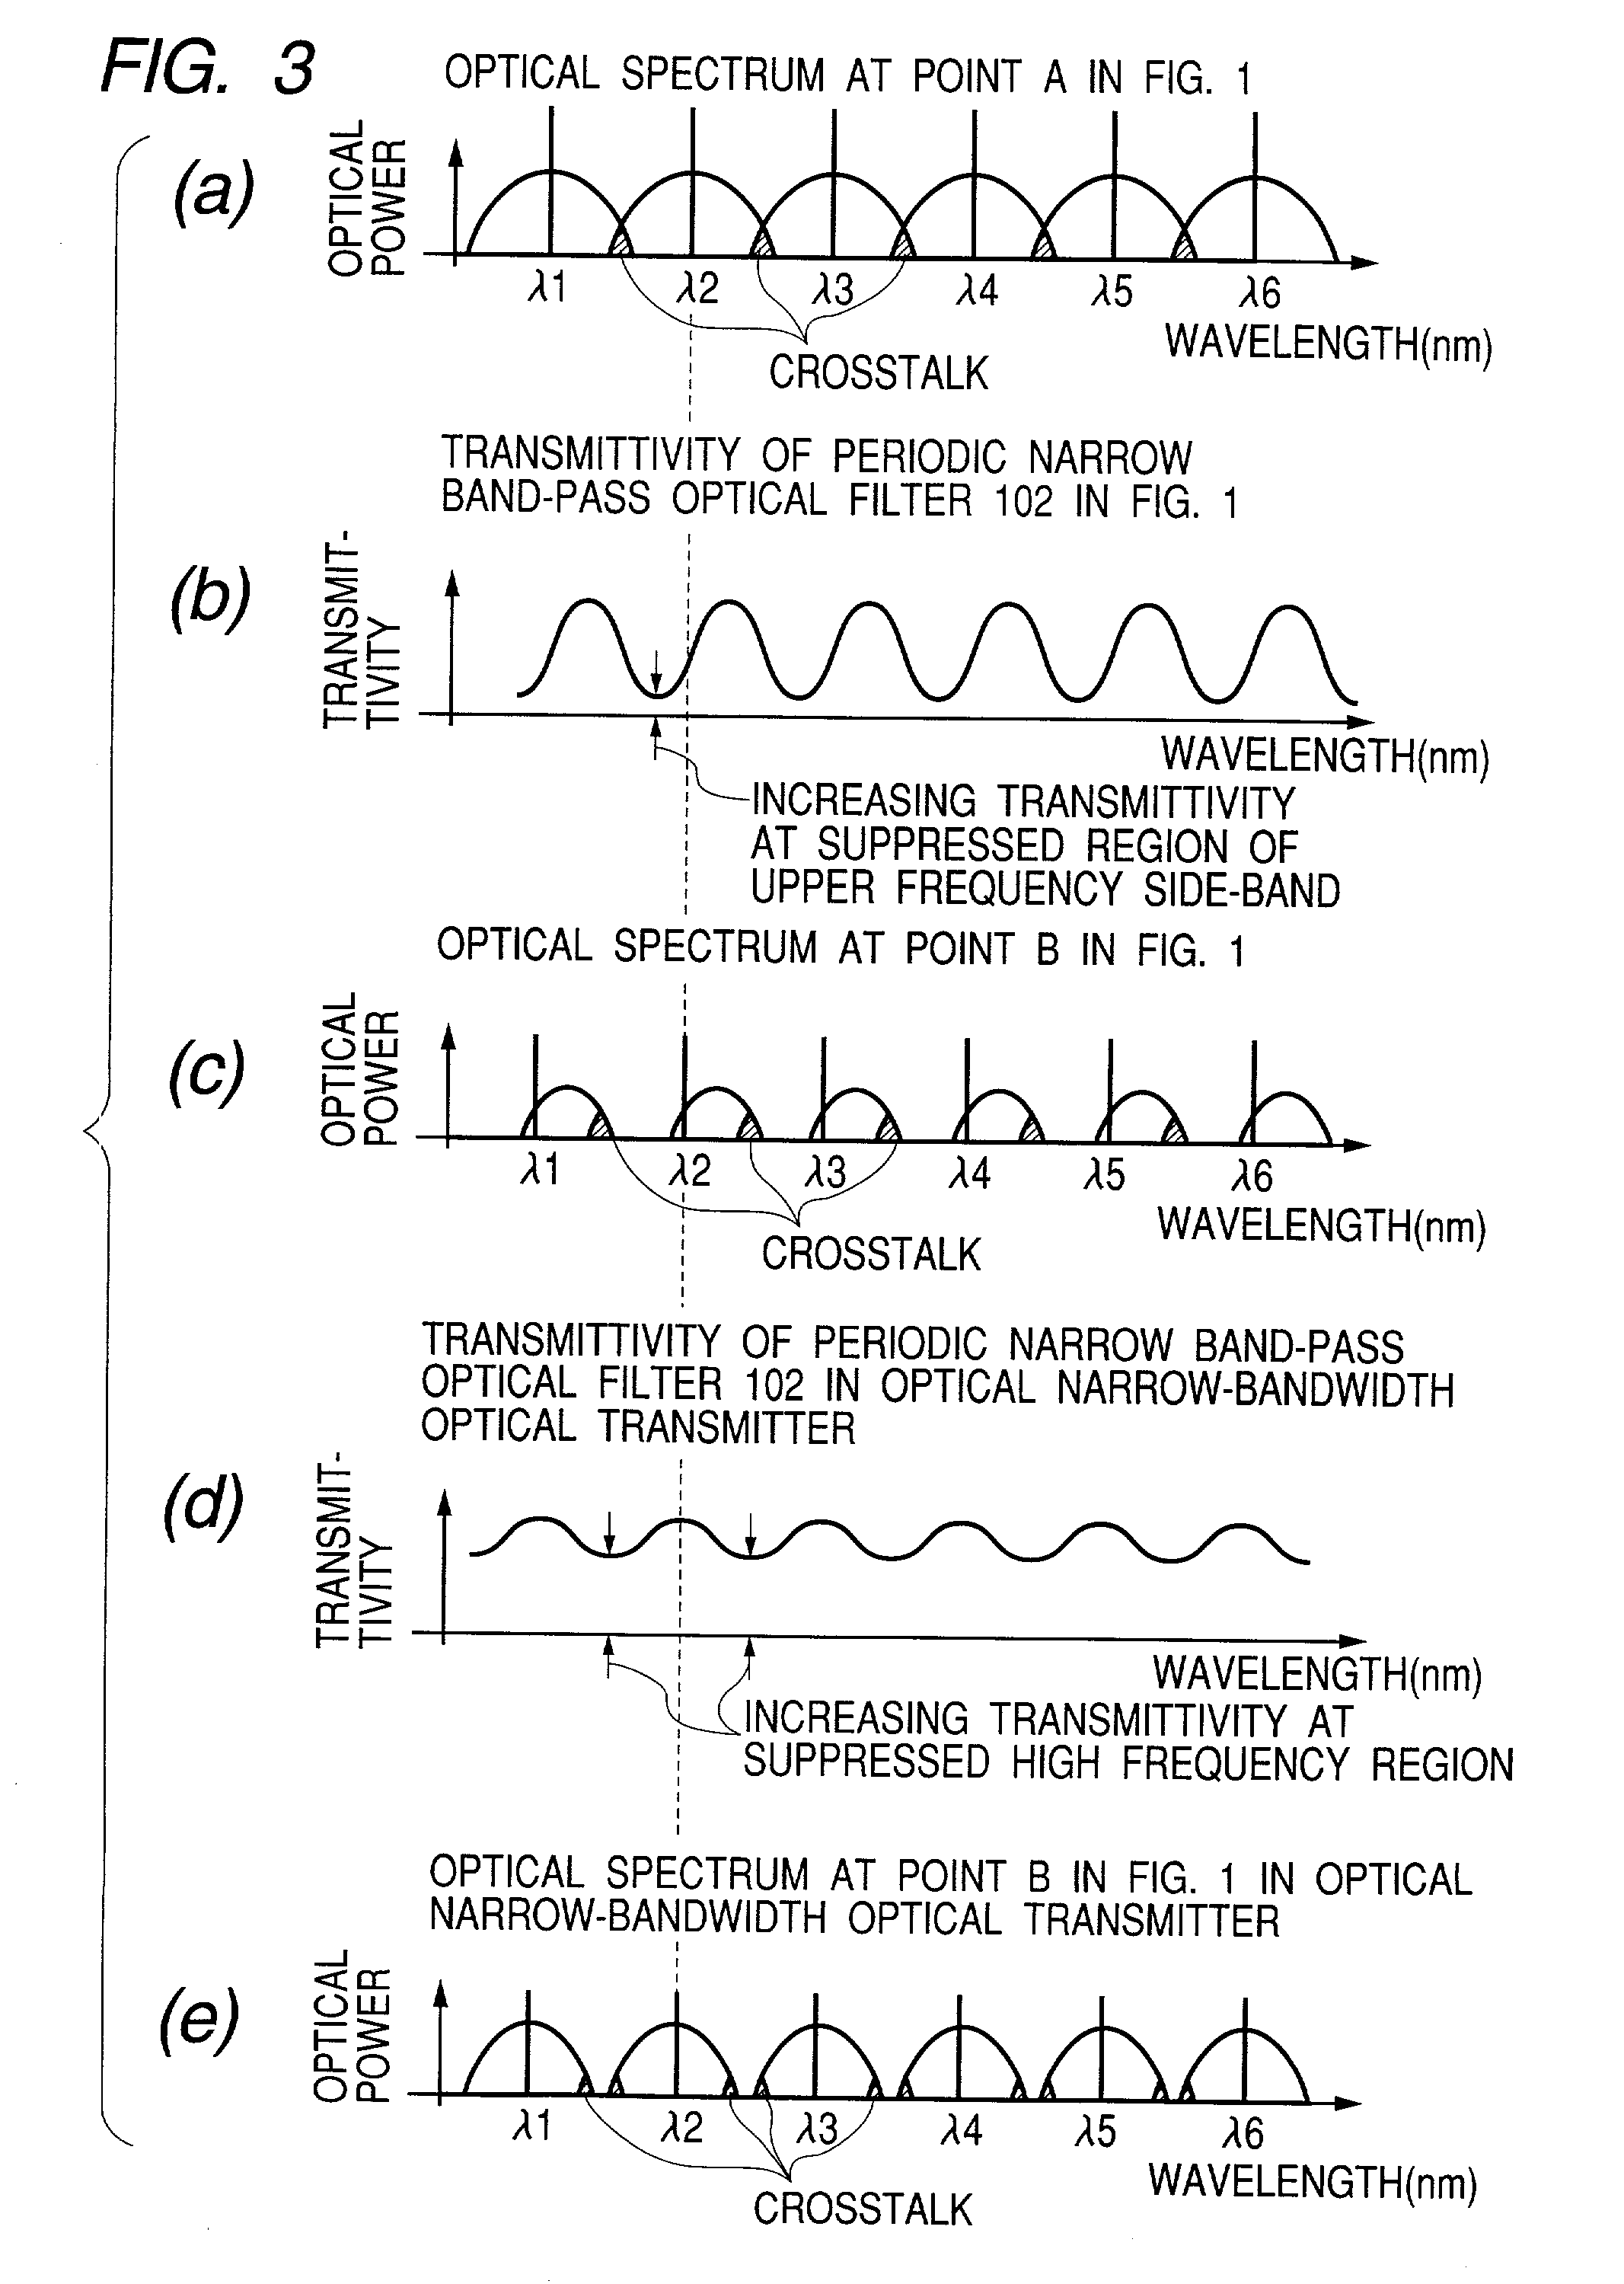 Wavelength-multiplexed narrow-bandwidth optical transmitter and wavelength-multiplexed vestigial-side-band optical transmitter